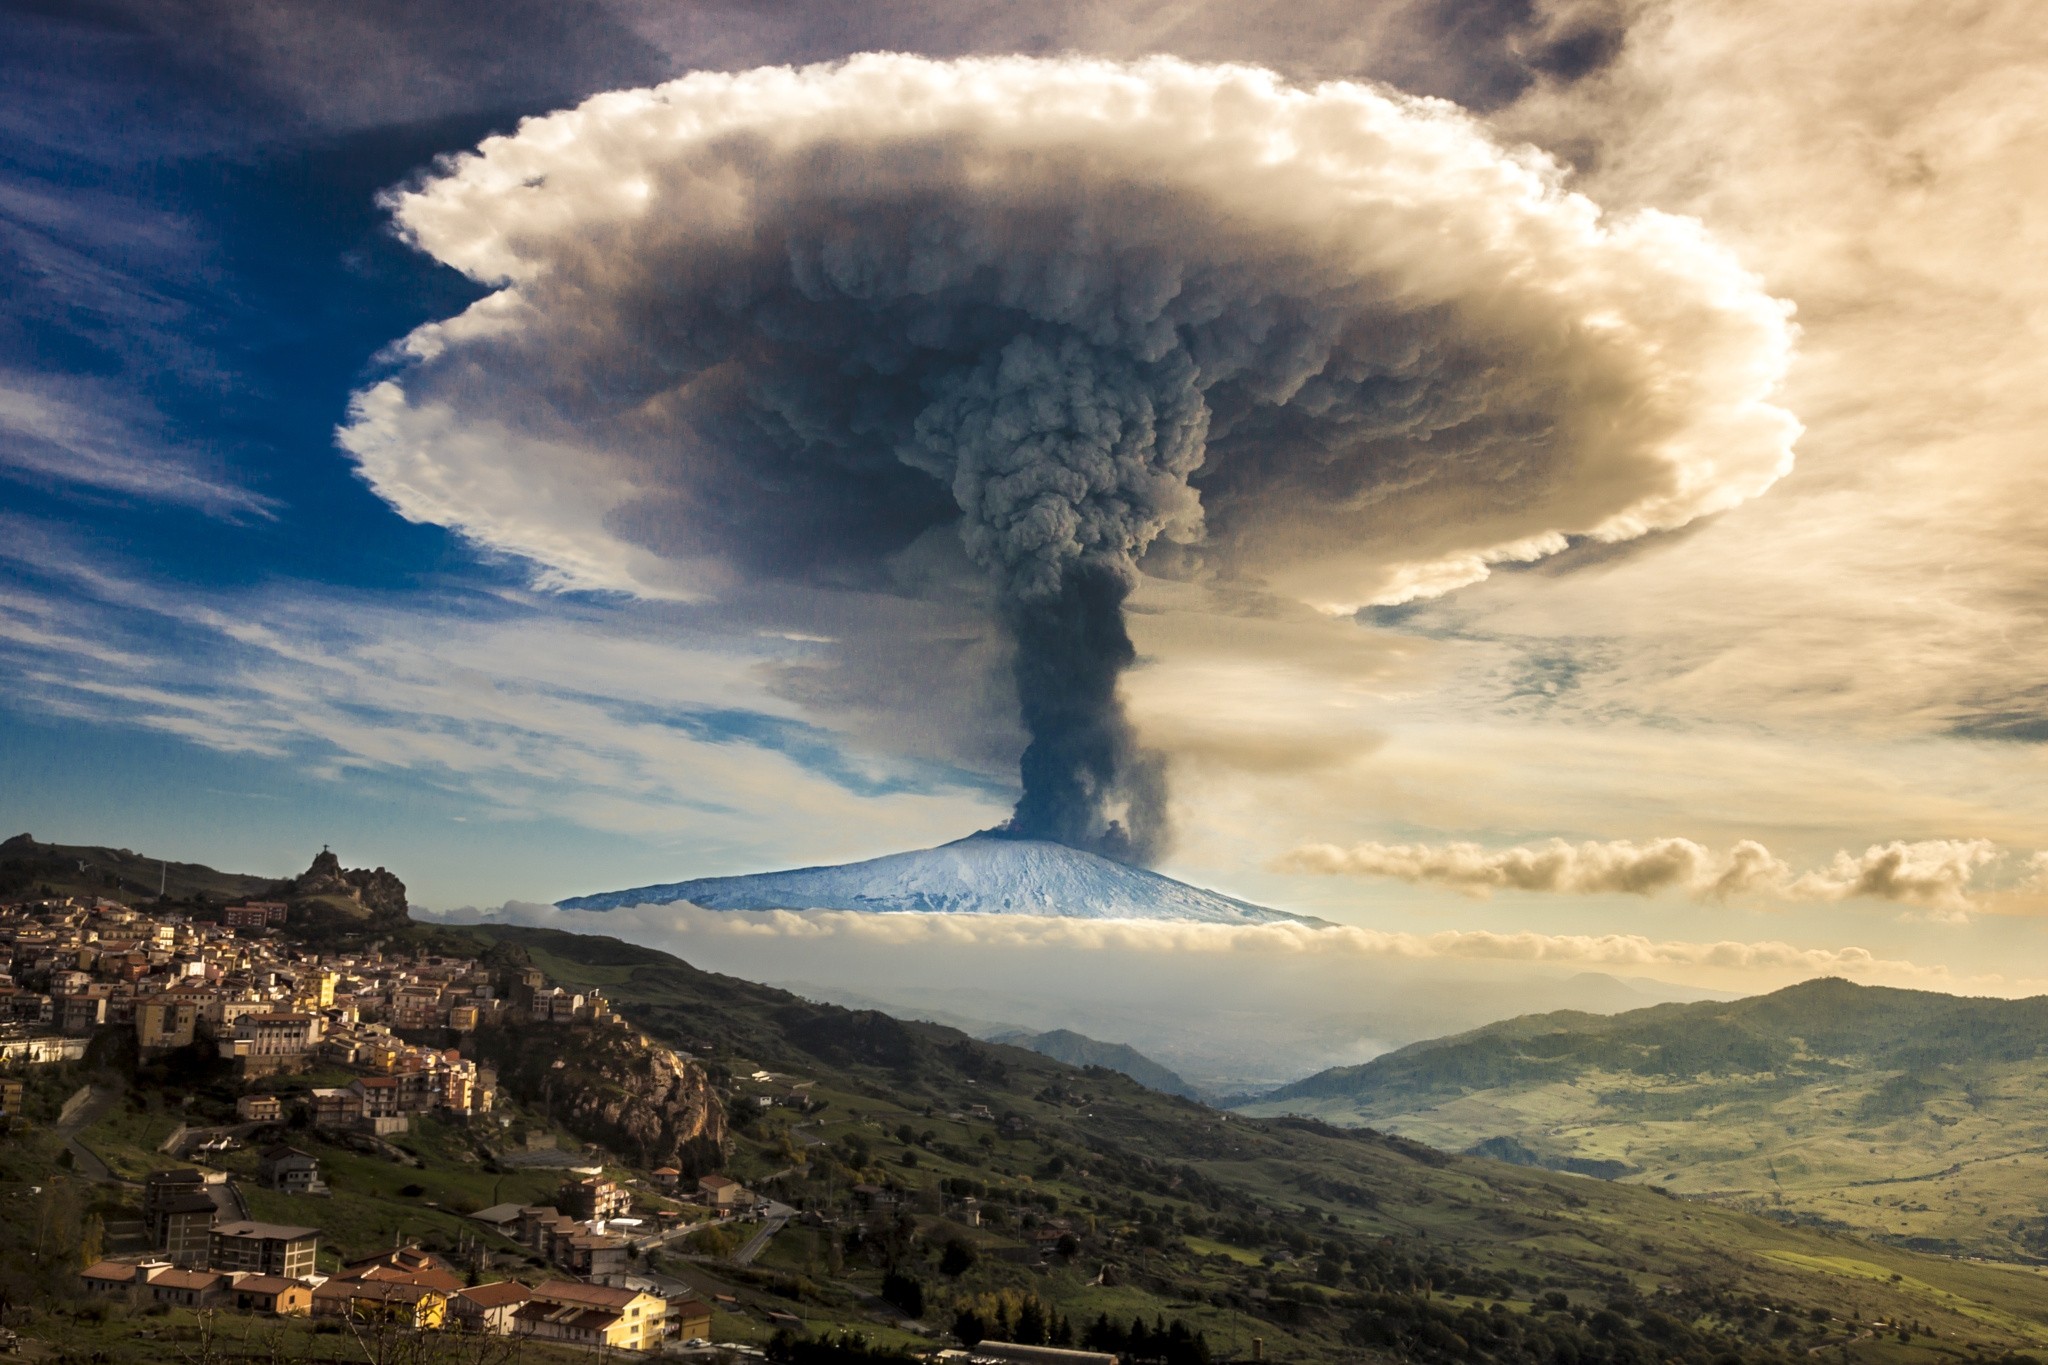 Nature Volcano Eruption Sicily Italy Snowy Peak Mushroom Smoke Sky Clouds Town Mountains Mount Etna 2048x1365